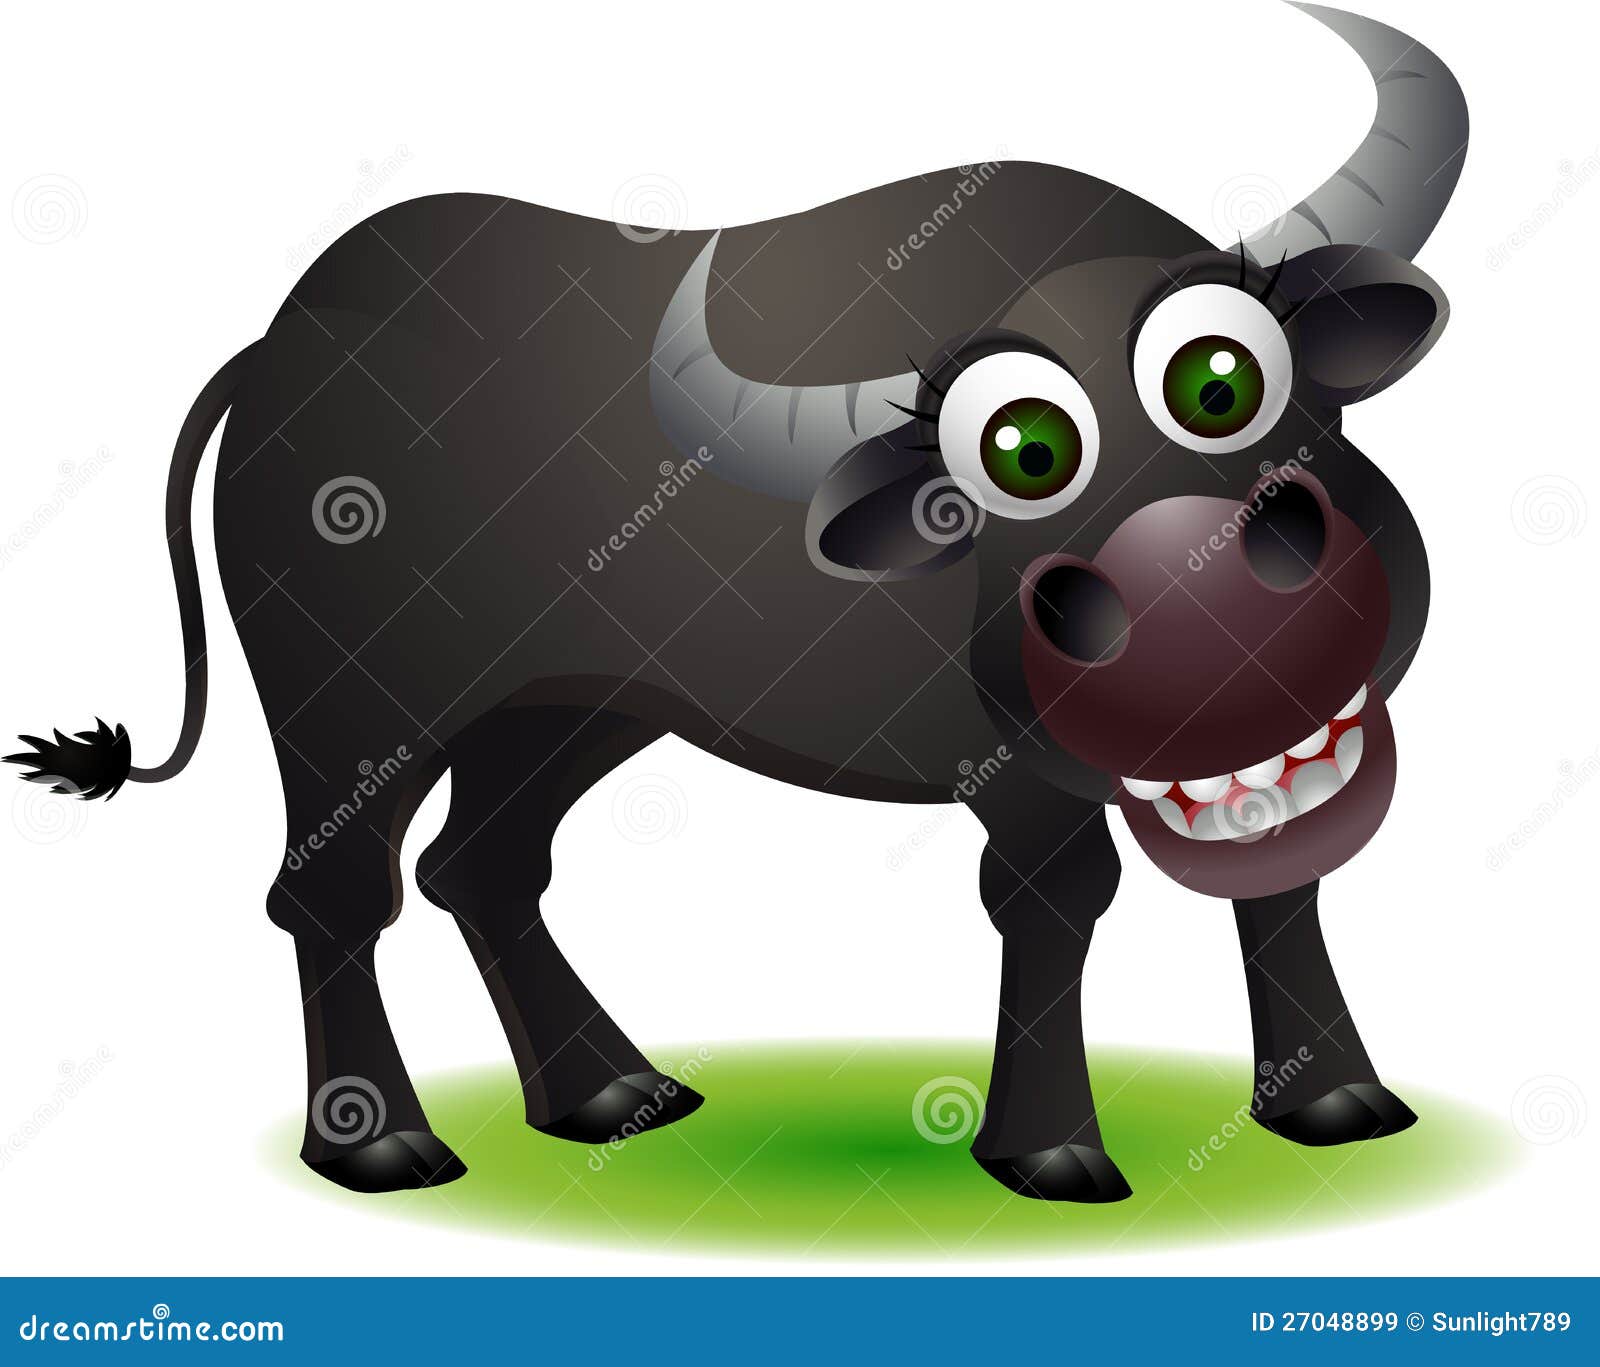 Cute buffalo cartoon stock illustration. Illustration of anger - 27048899